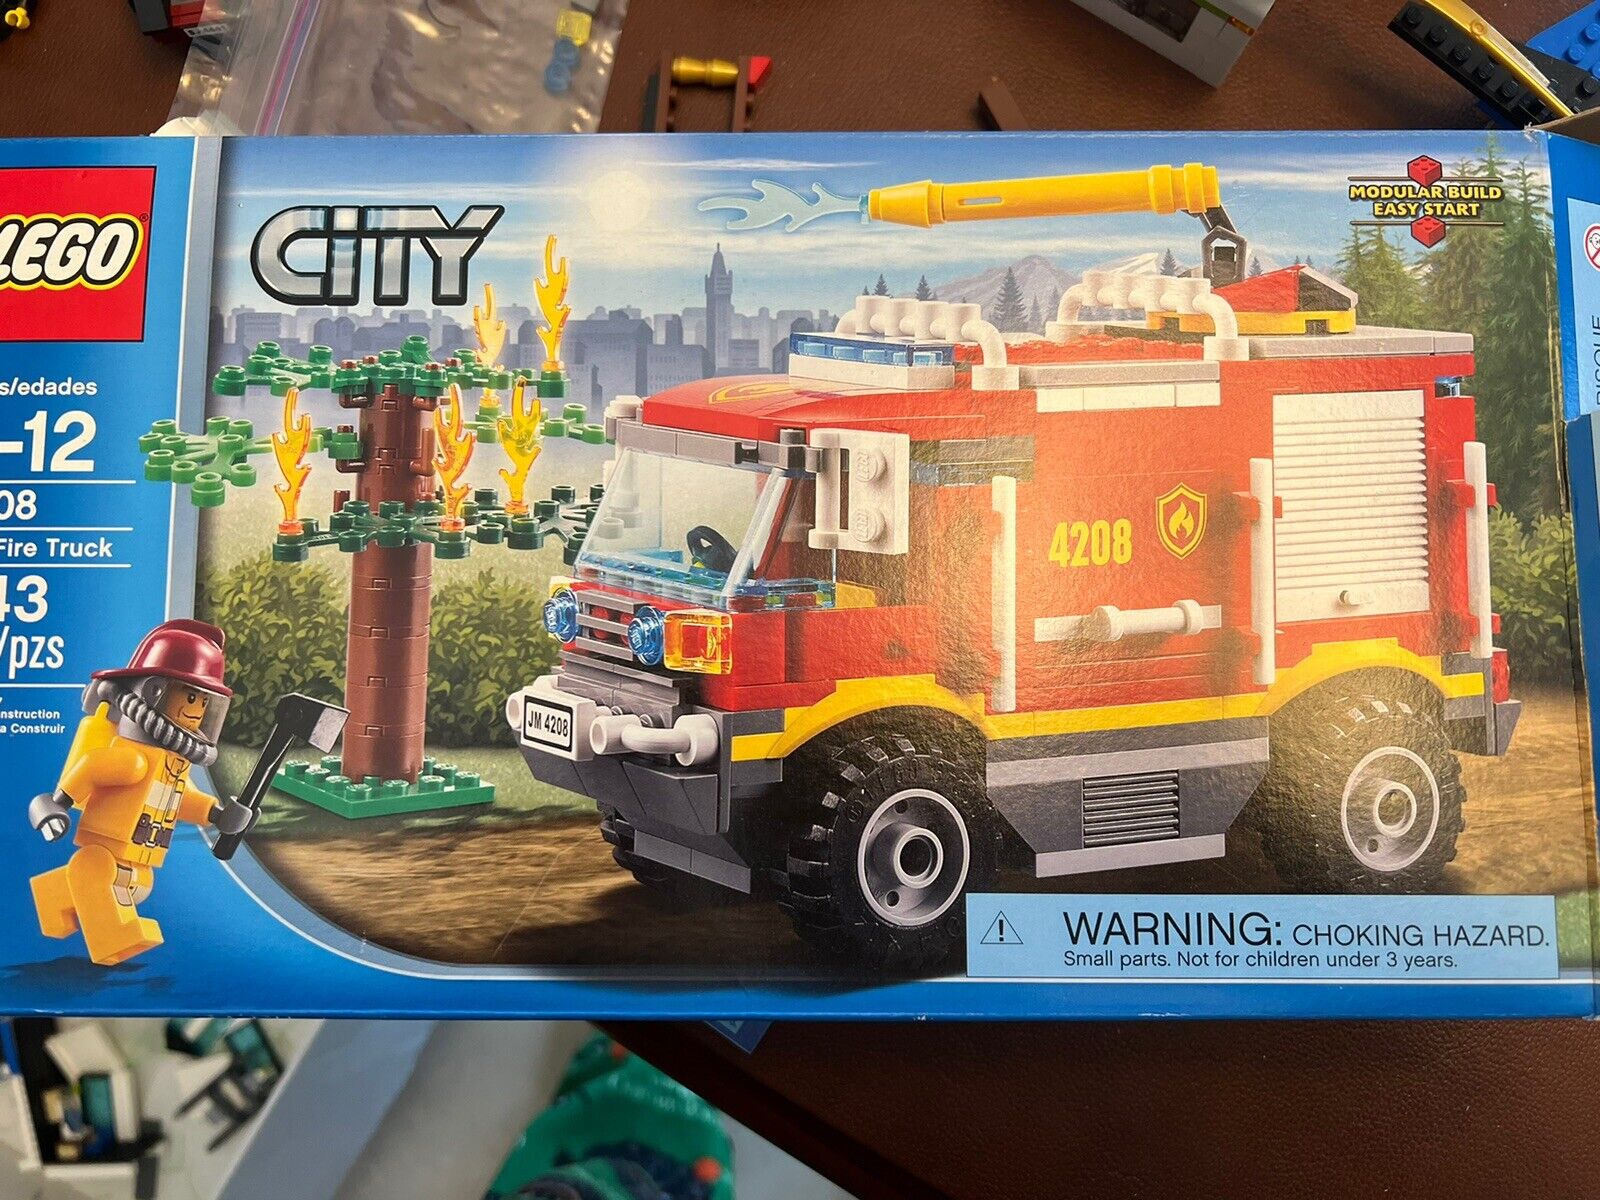 Lego City 4208 4x4 Fire Truck W/box& Instructions, 100%